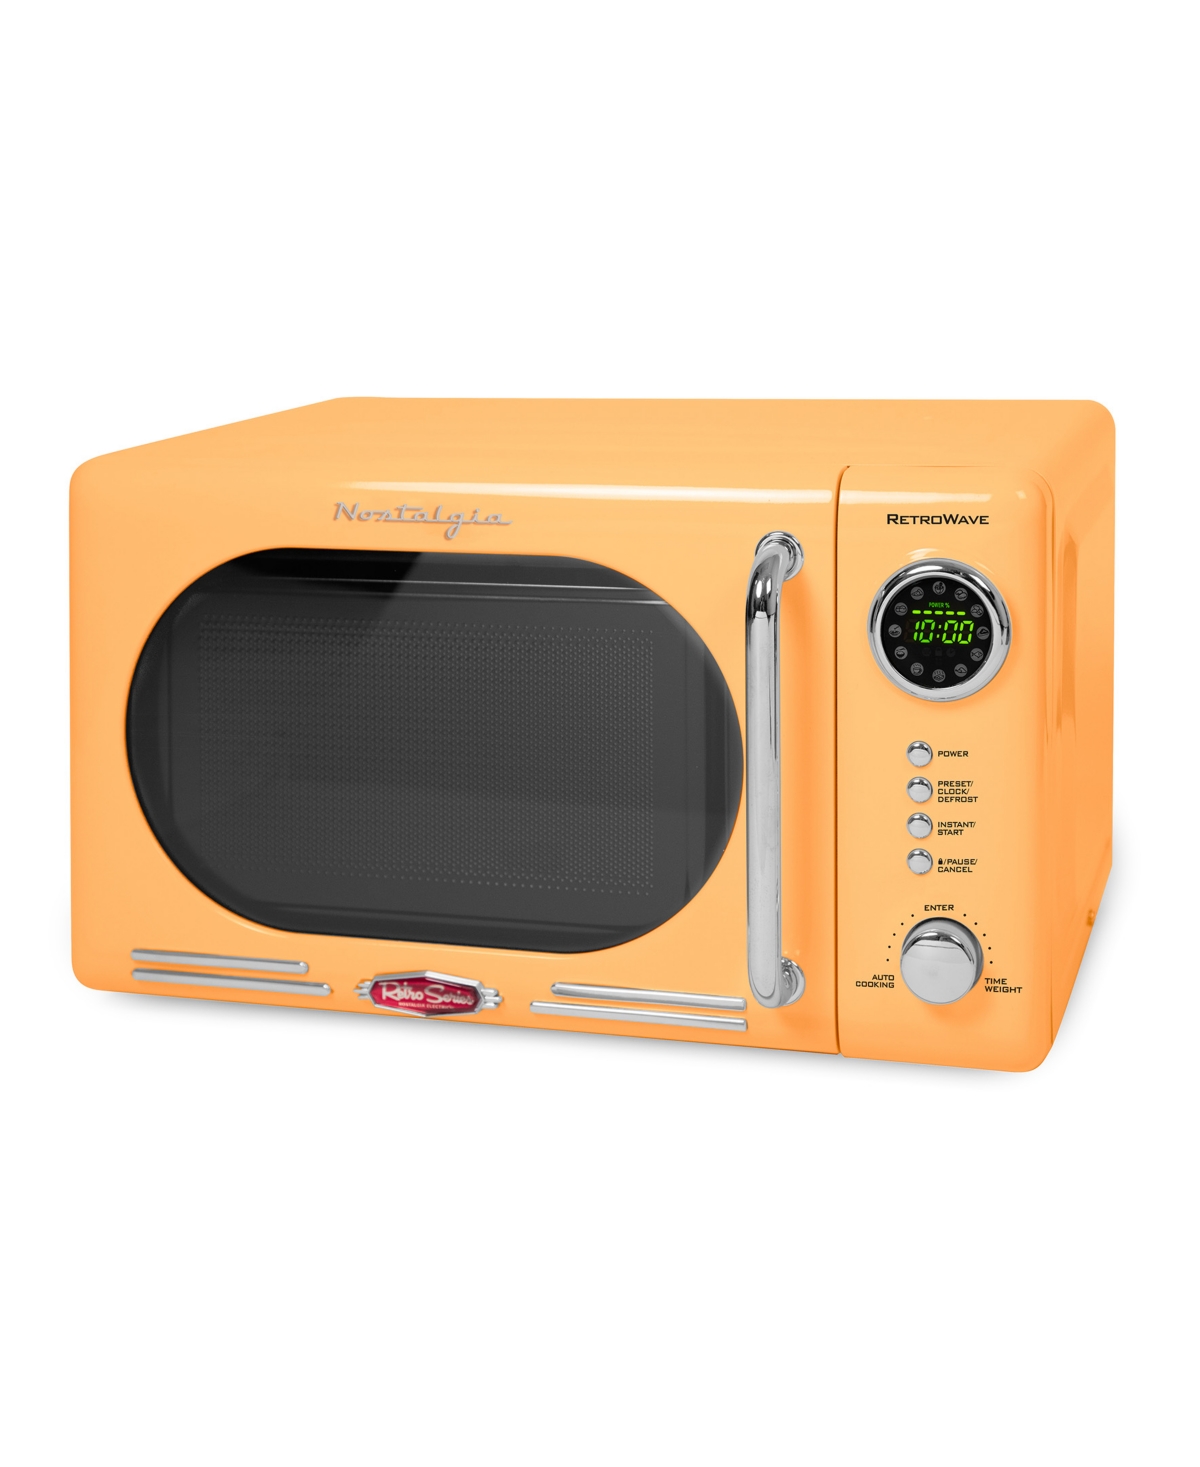 Nostalgia Retro 0.7 Cubic Foot 700 Watt Countertop Microwave Oven In Orange